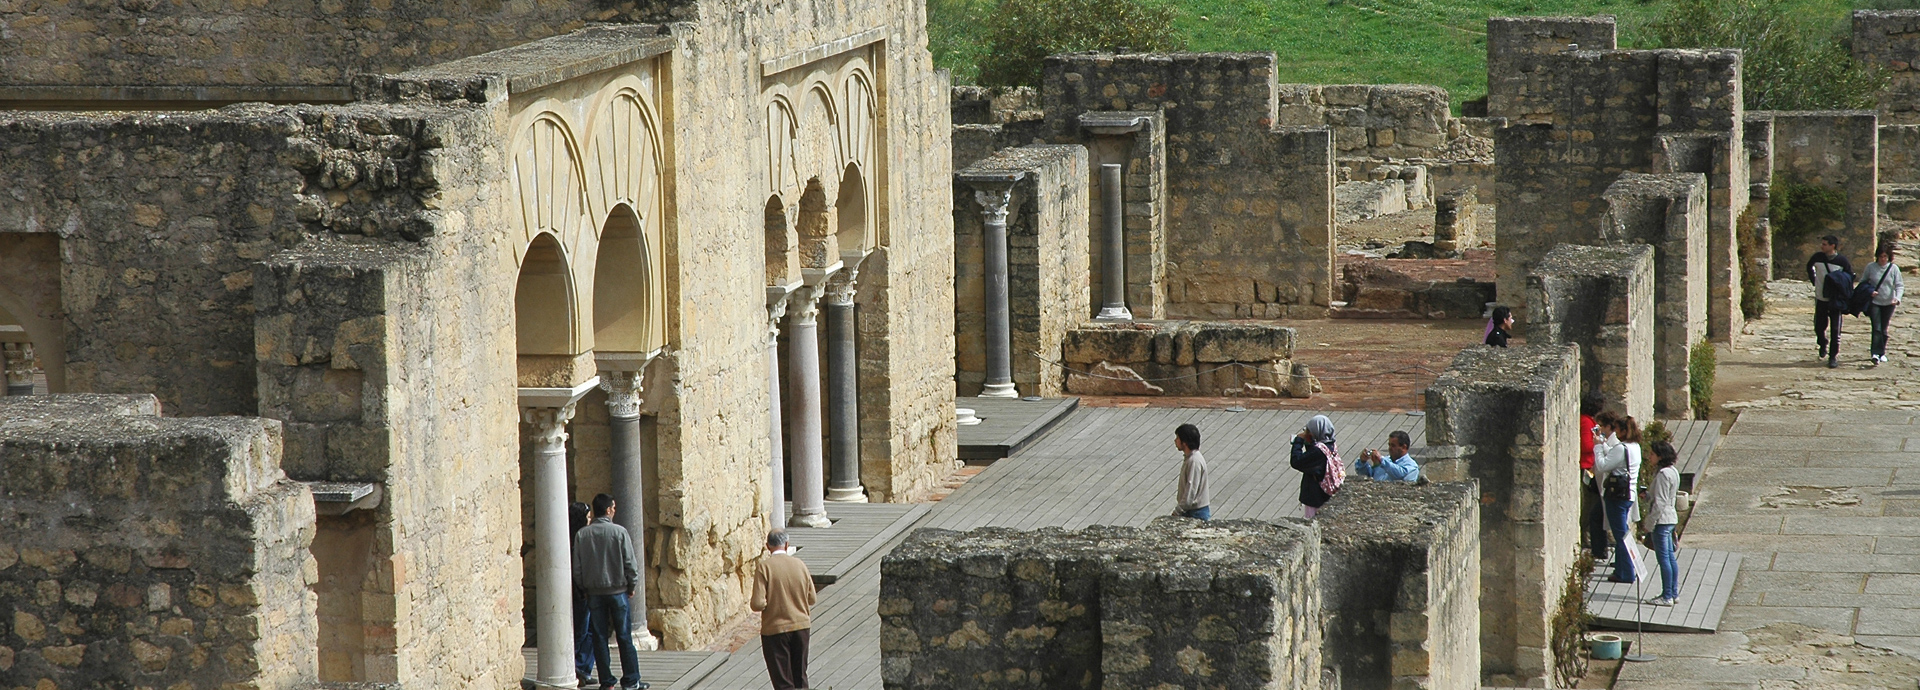 Medina Azahara, Patrimonio de la Humanidad por la UNESCO